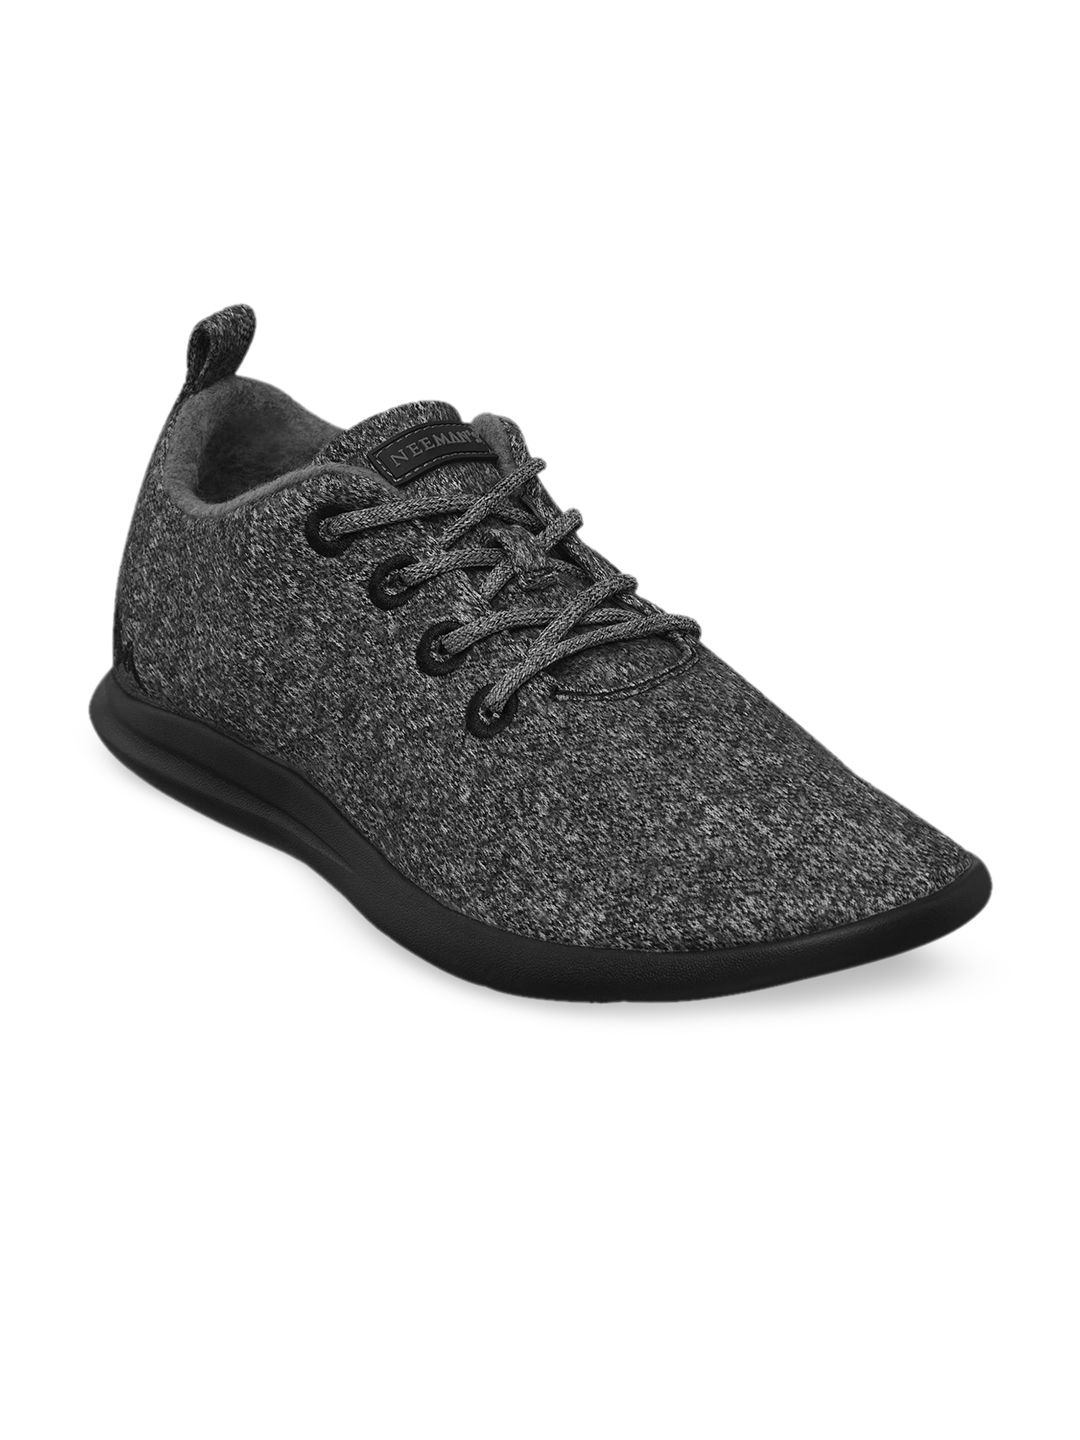 NEEMANS Unisex Grey Wool Joggers Sneakers Price in India